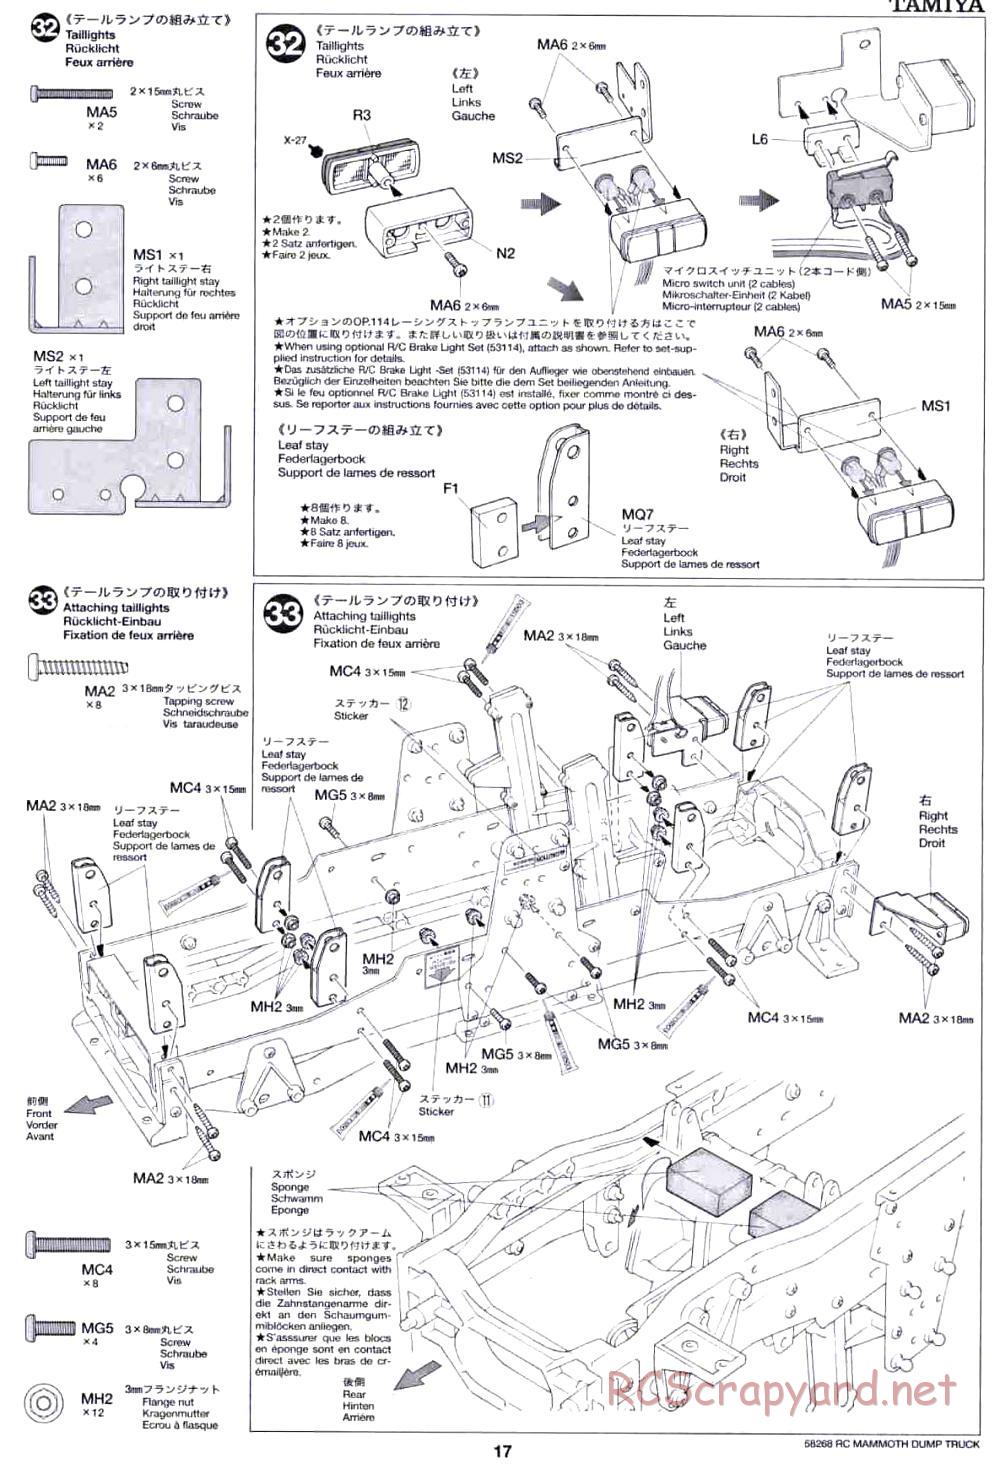 Tamiya - Mammoth Dump Truck Chassis - Manual - Page 17